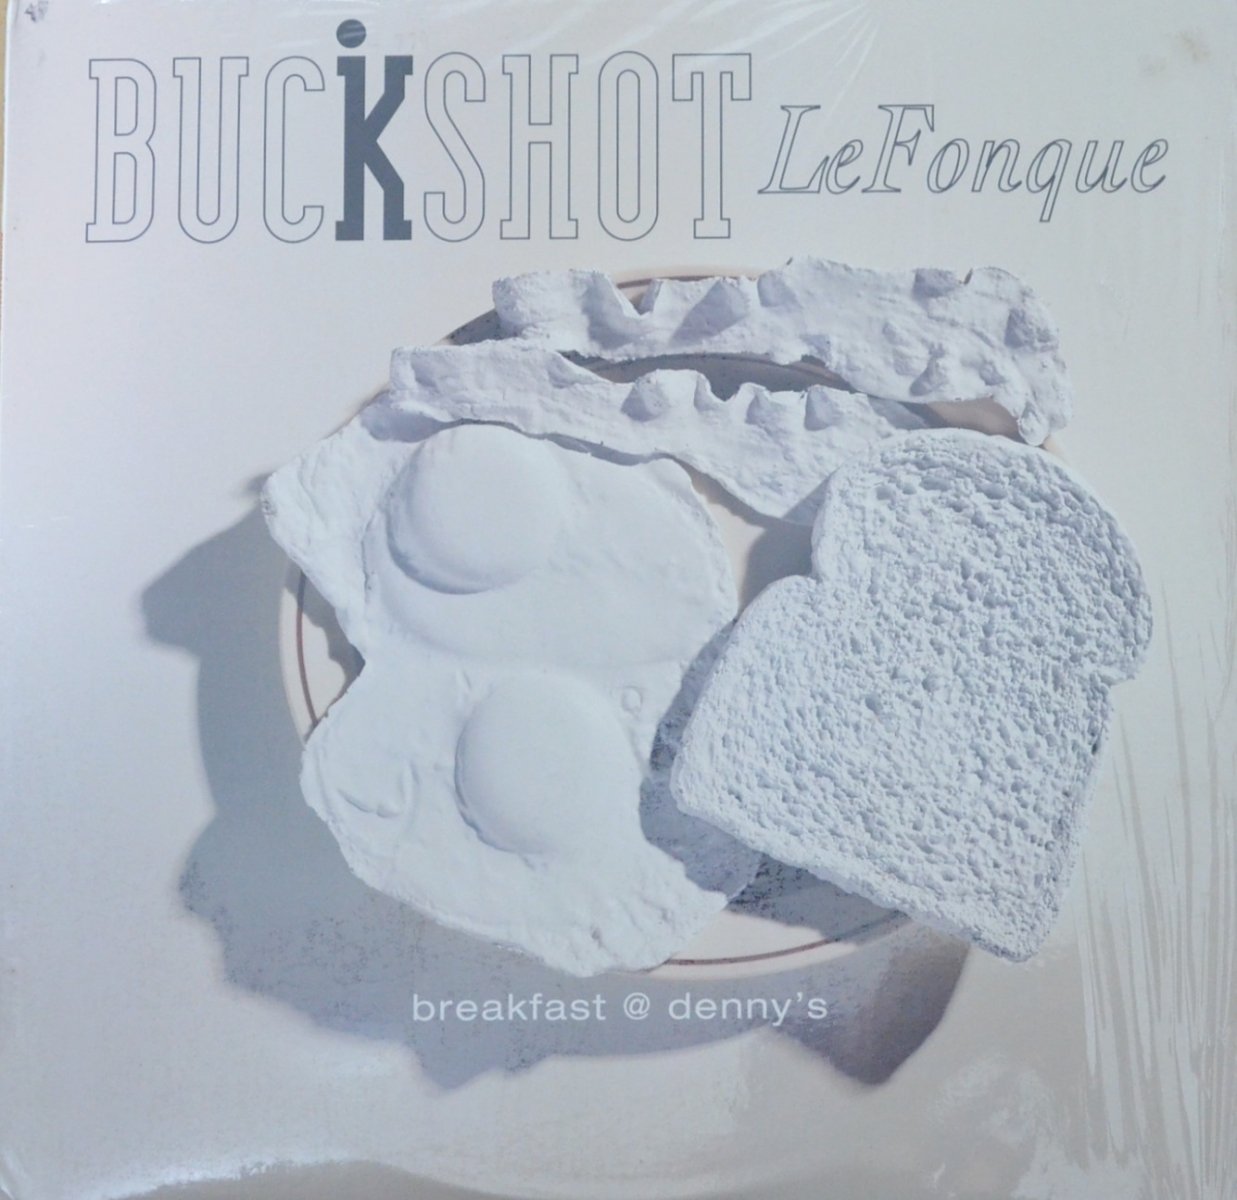 BUCKSHOT LEFONQUE ‎/ BREAKFAST @ DENNY'S (DJ PREMIER,SHOWBIZ)(12